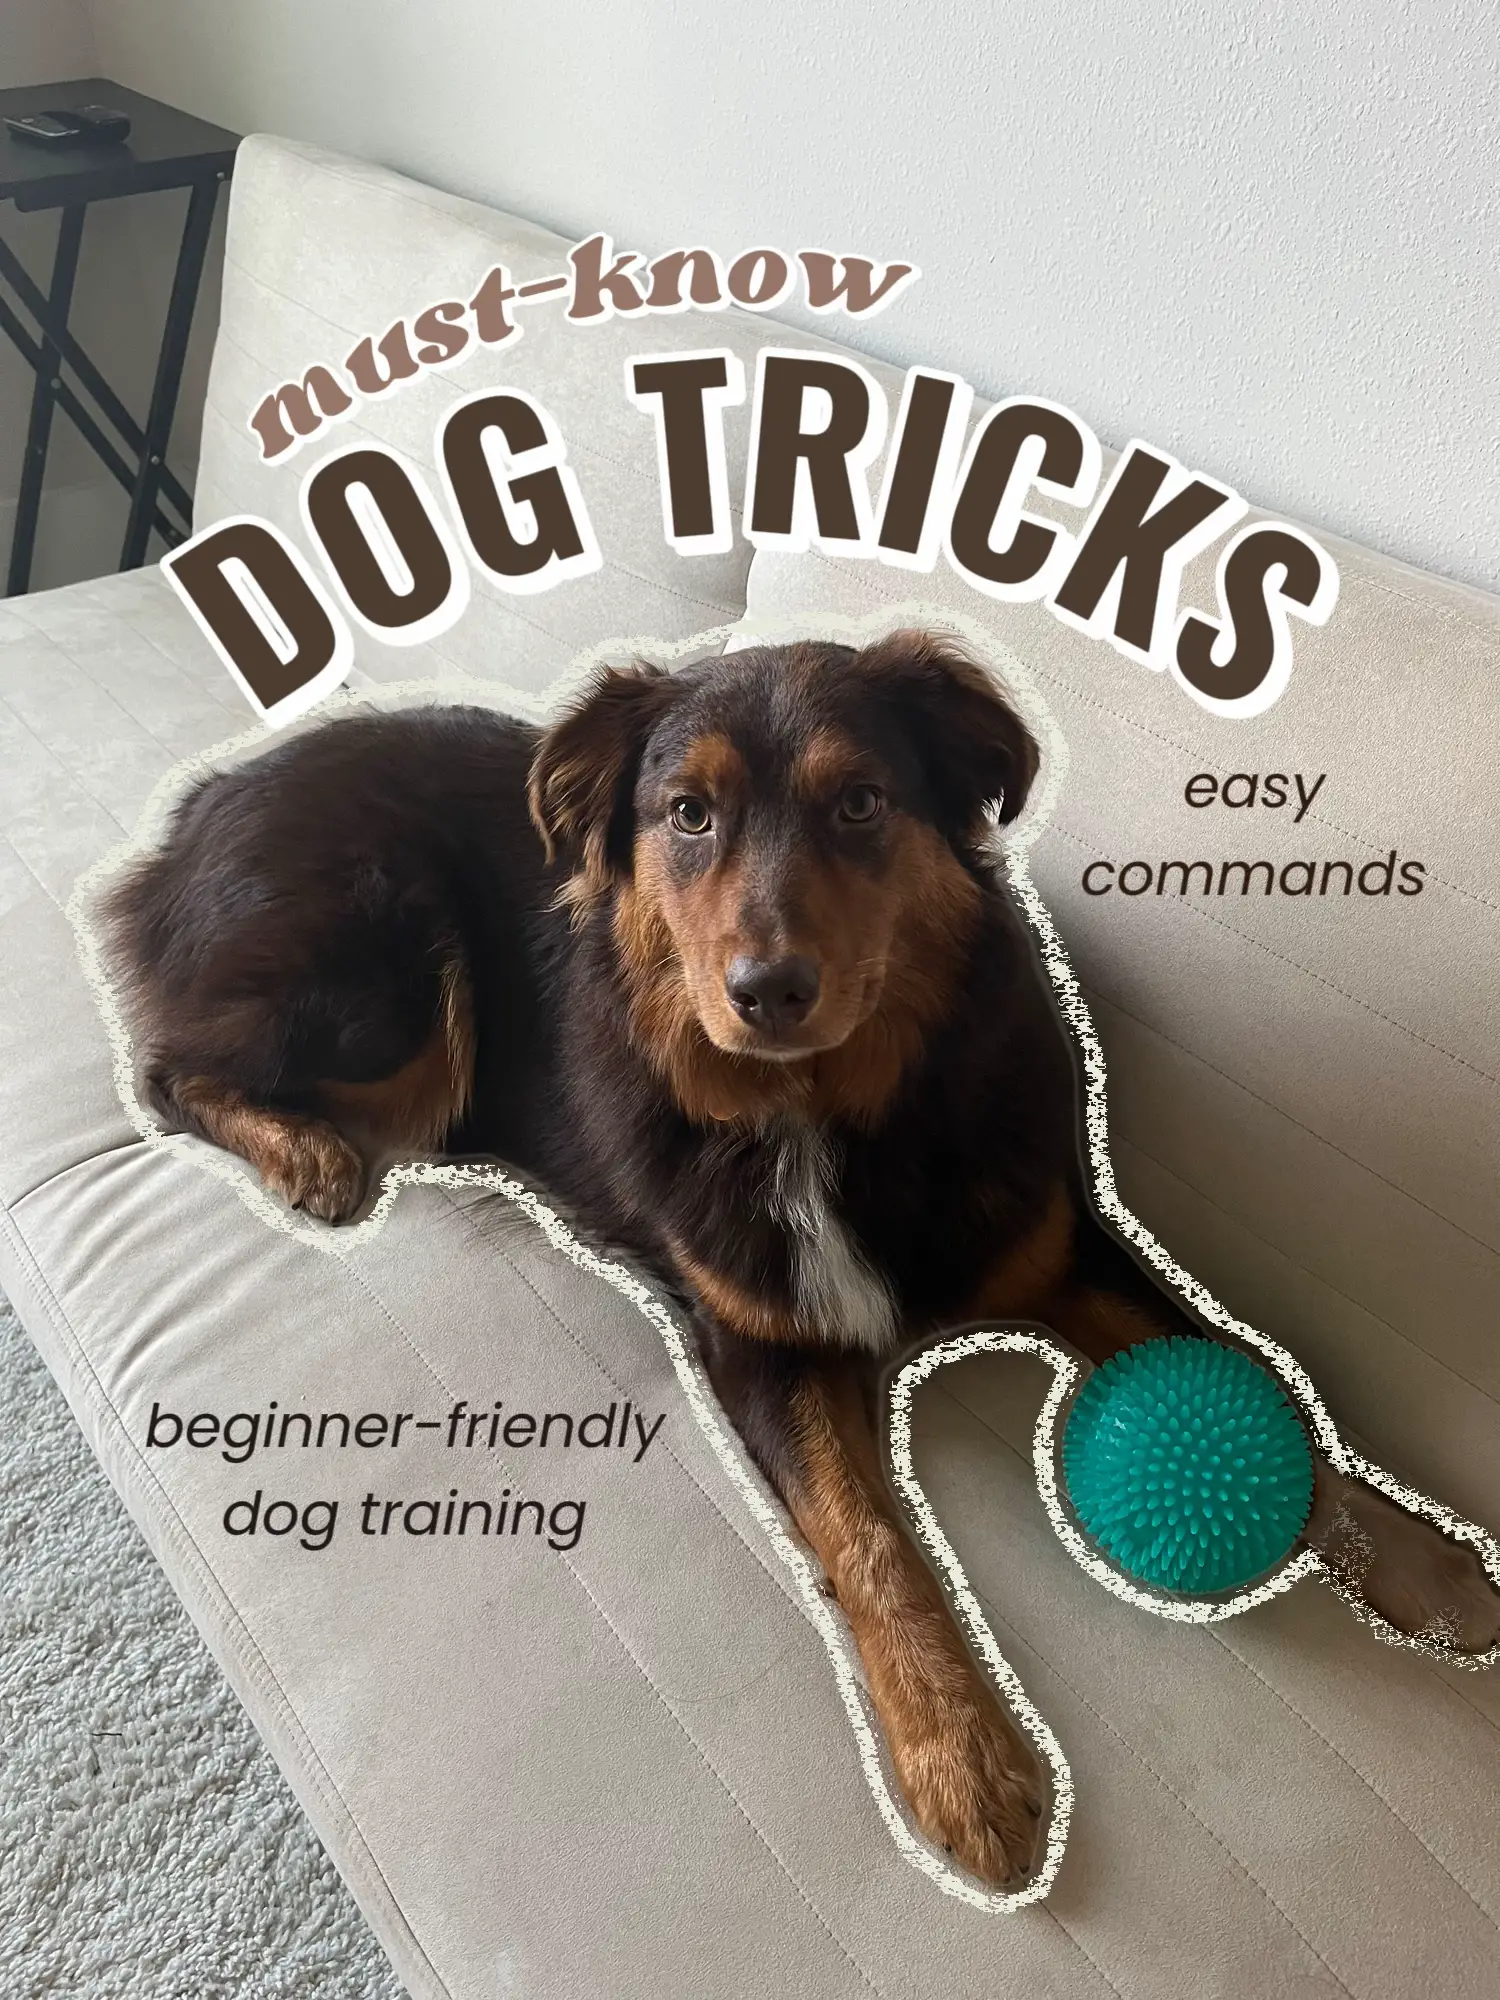 clicker training is our favorite especially for tricks #dogsoftiktok #, dog training